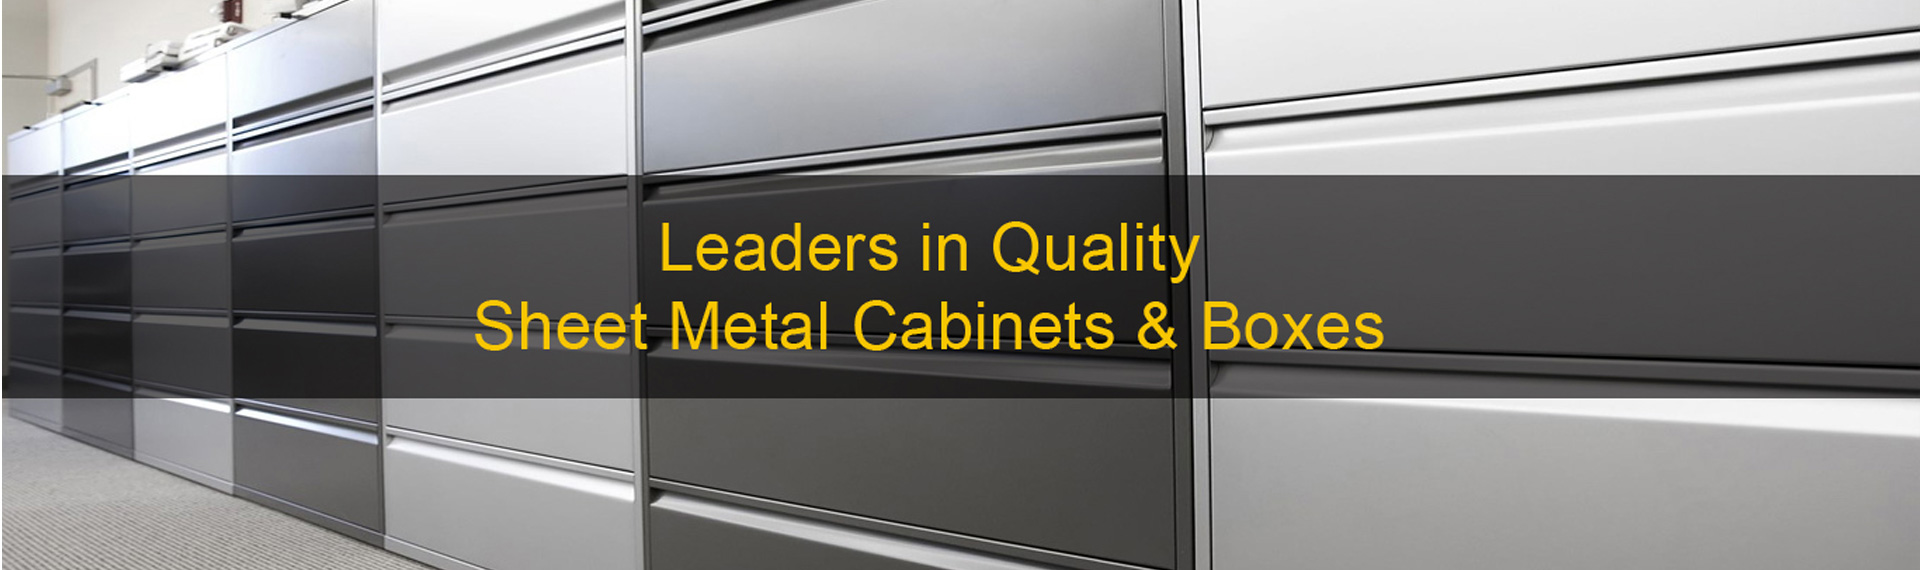 sheet metal cabinets